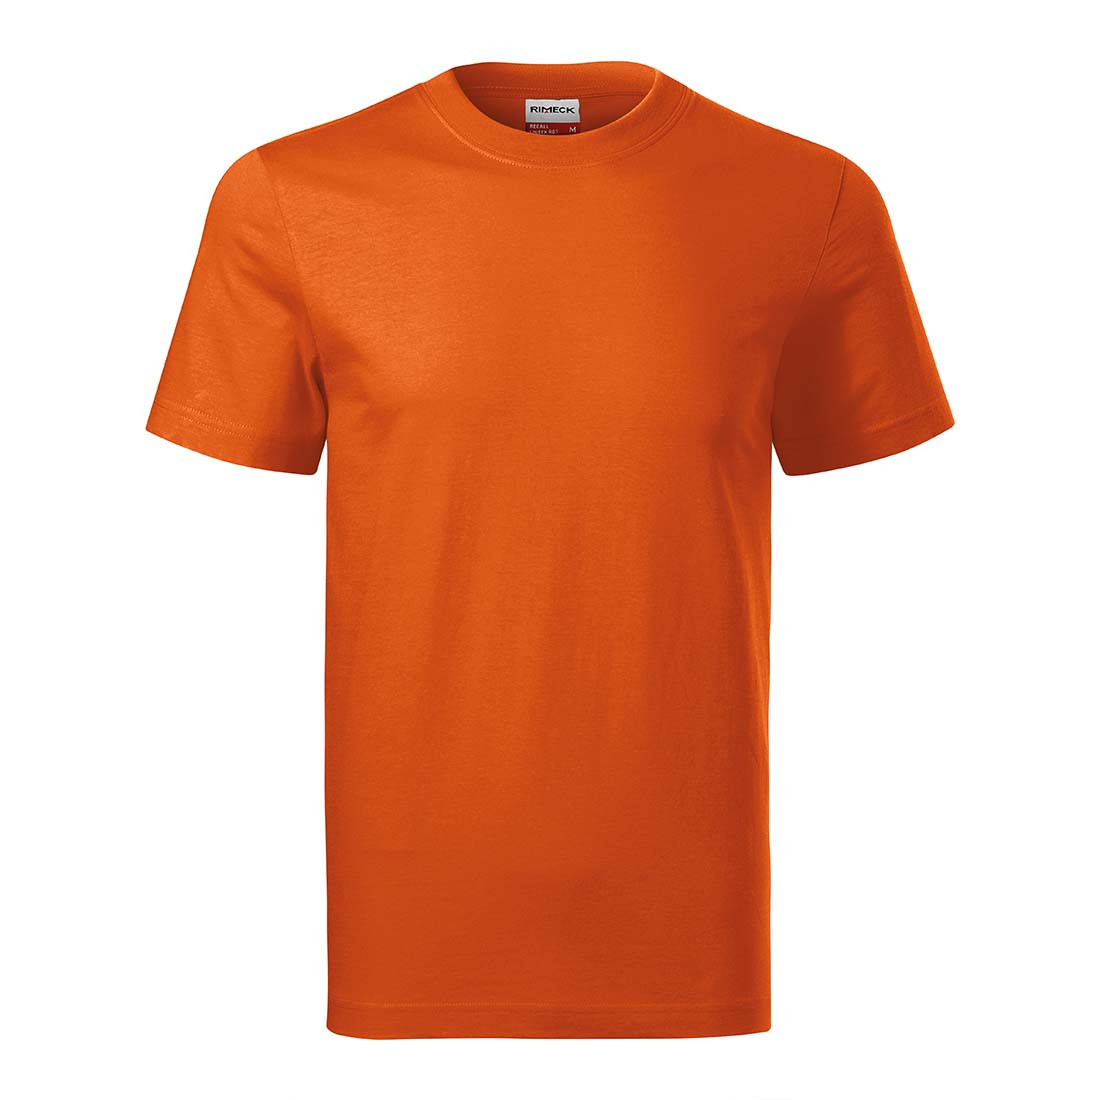 Camiseta unisex RECALL - Ropa de protección